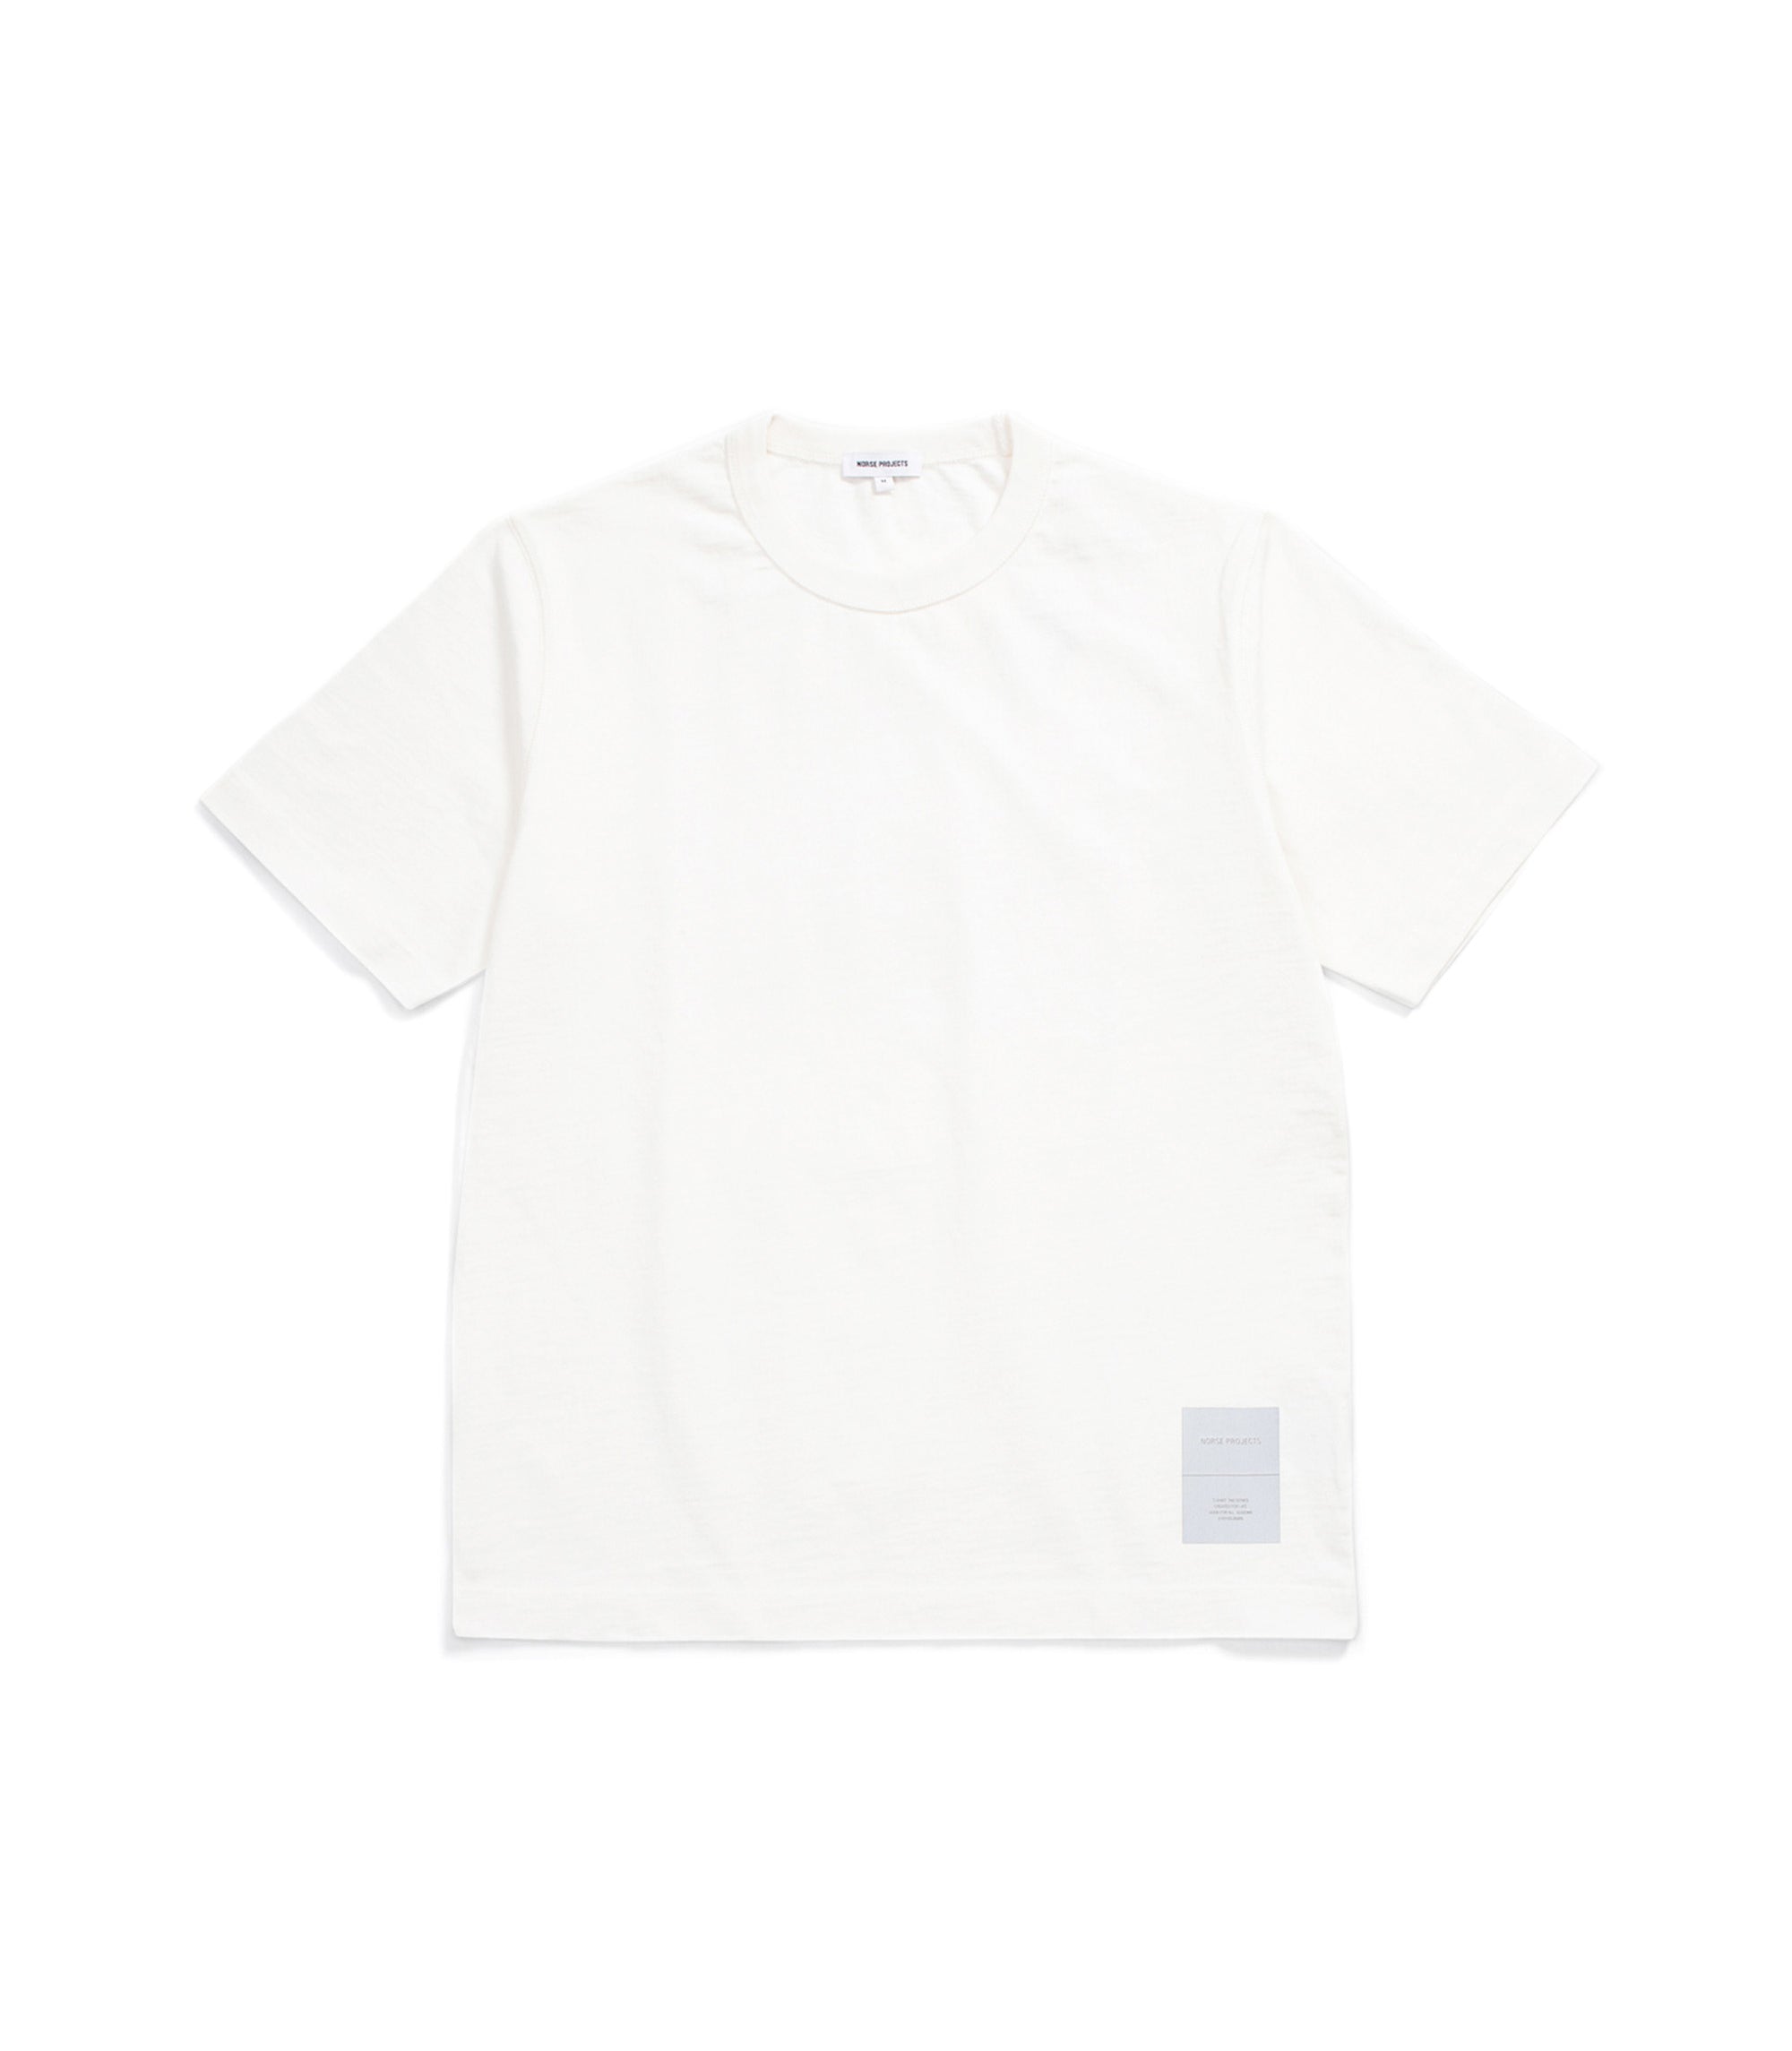 Holger Tab Series T-shirt - Reflective White